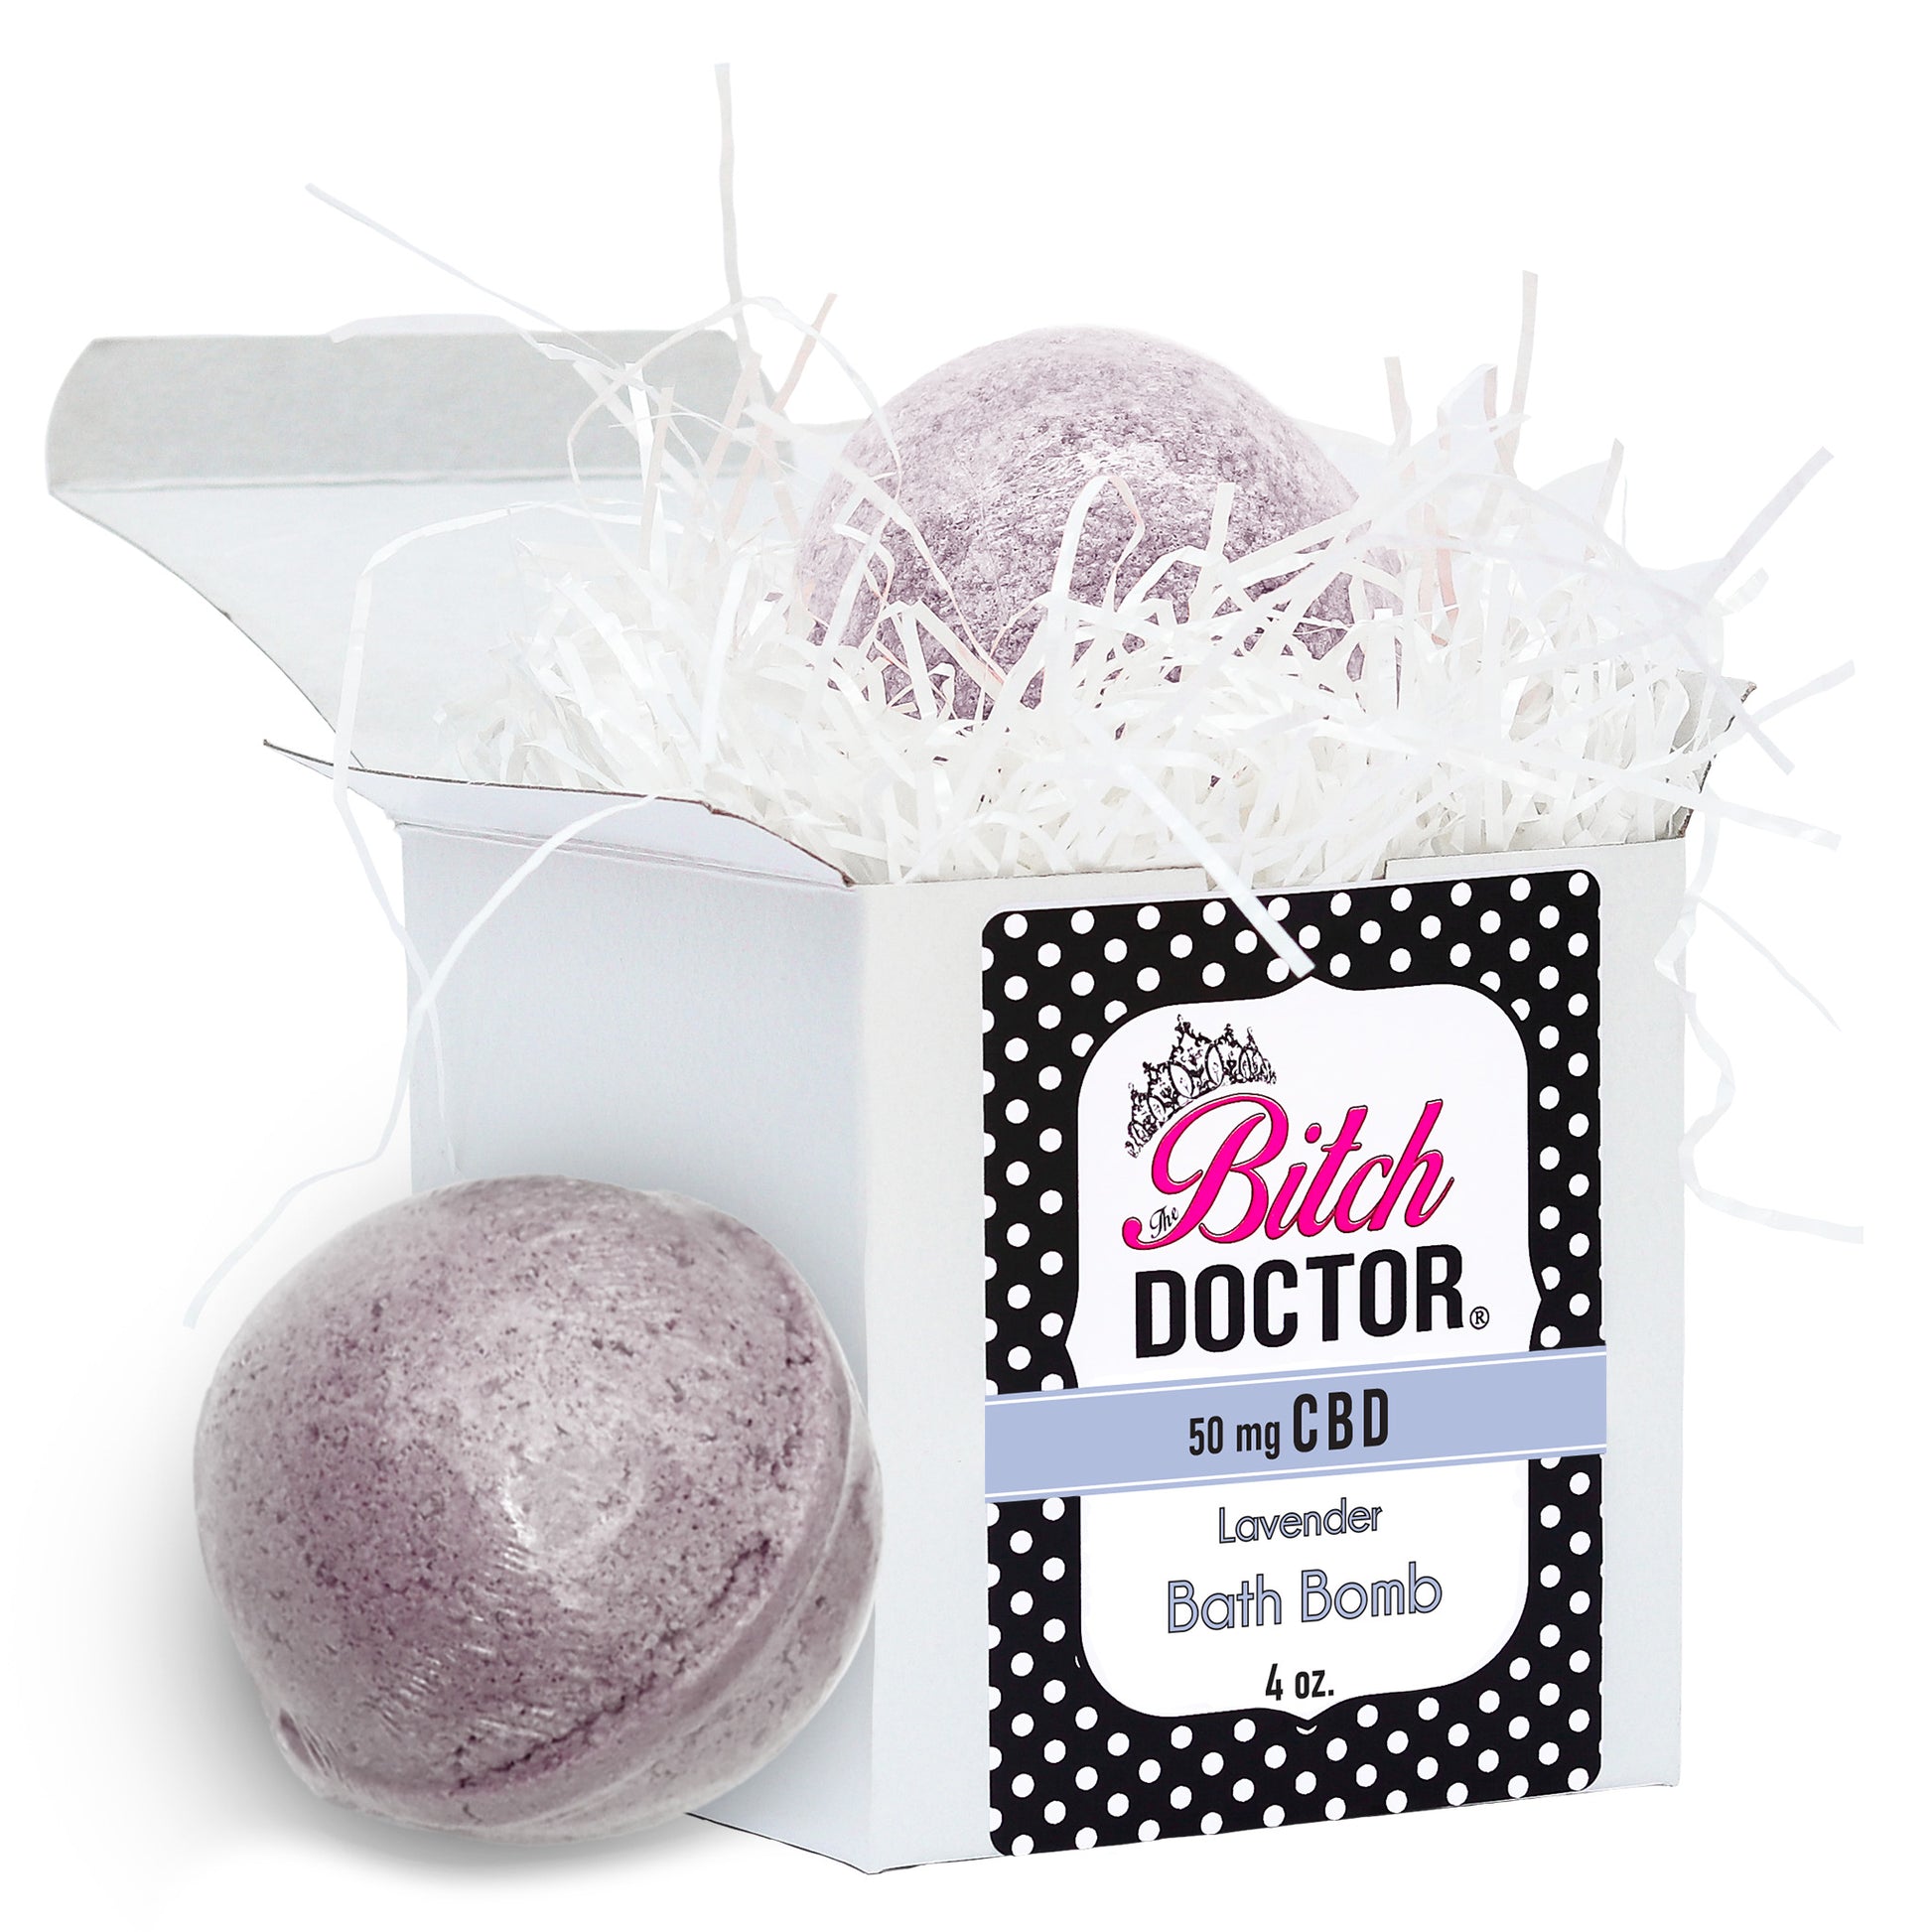 The Bitch Doctor CBD Bath Bomb. Lavender Scent